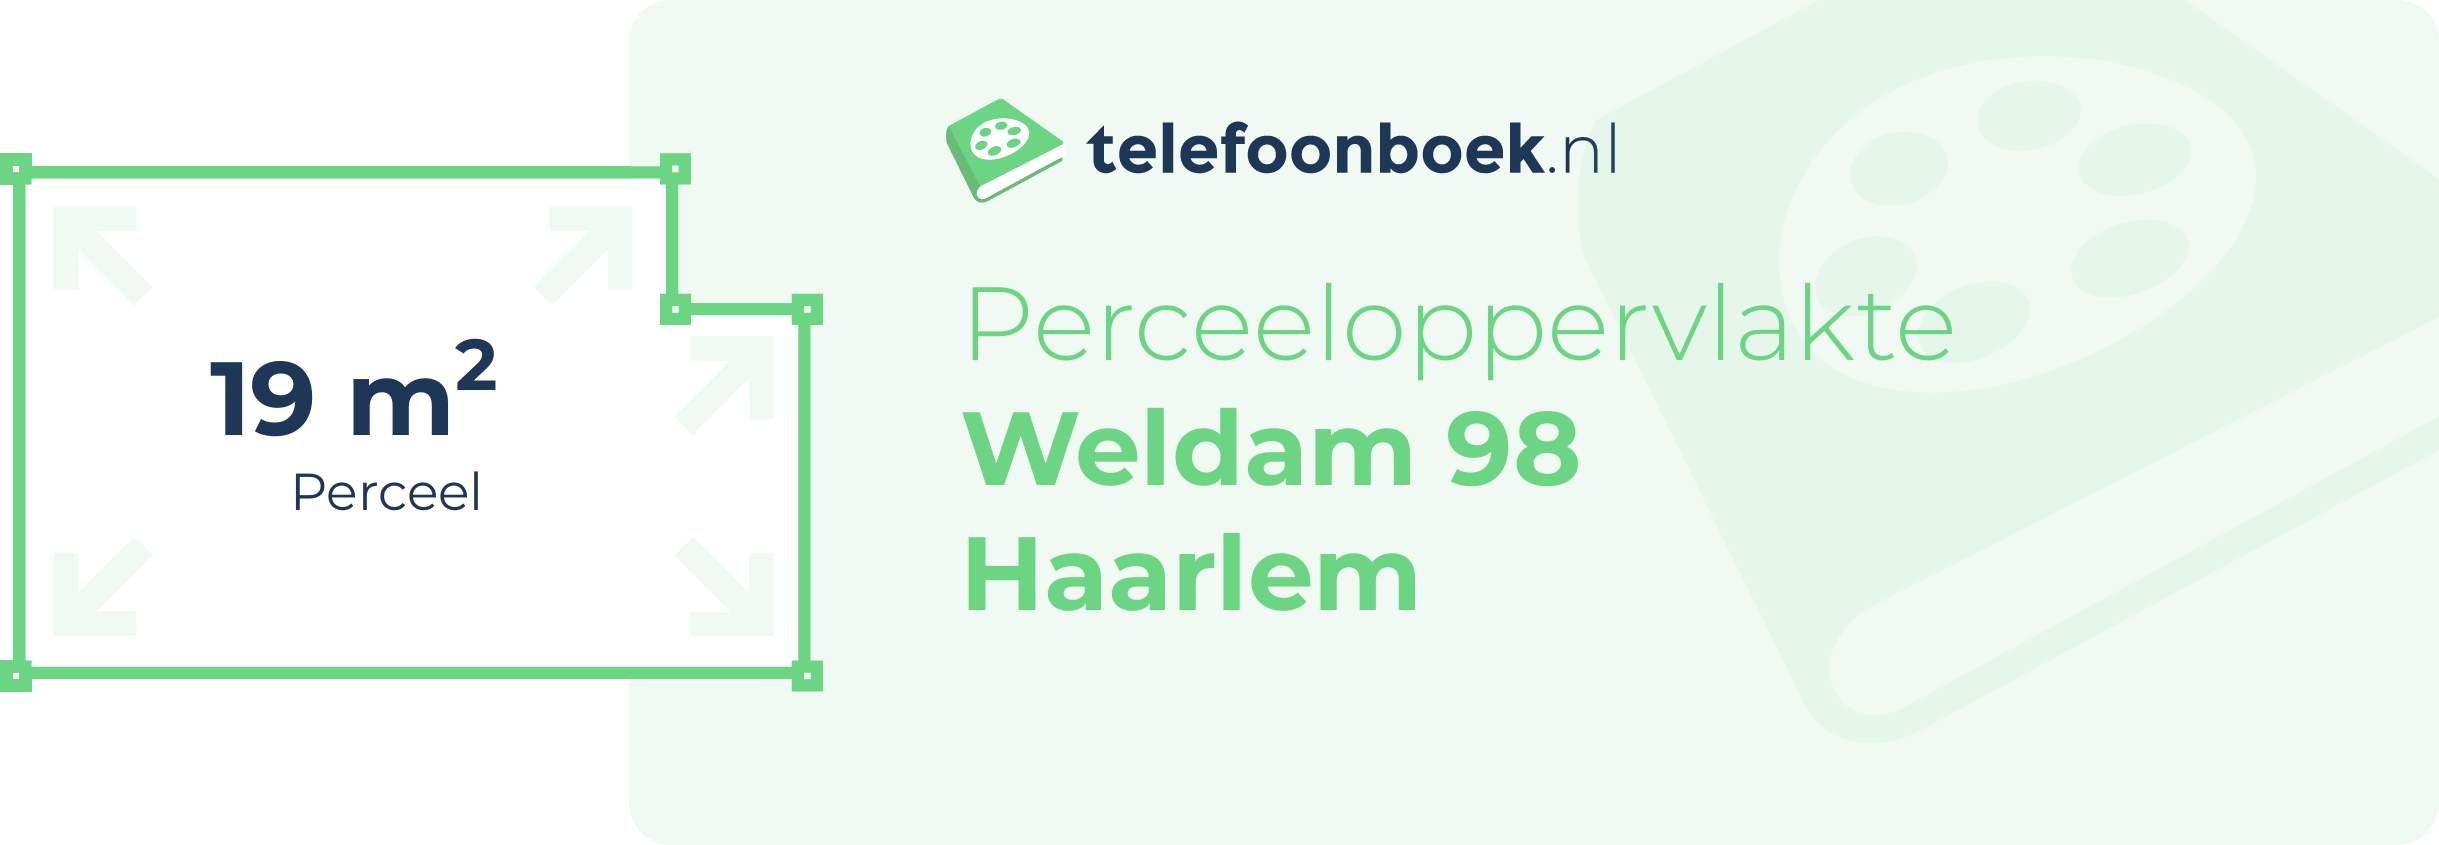 Perceeloppervlakte Weldam 98 Haarlem